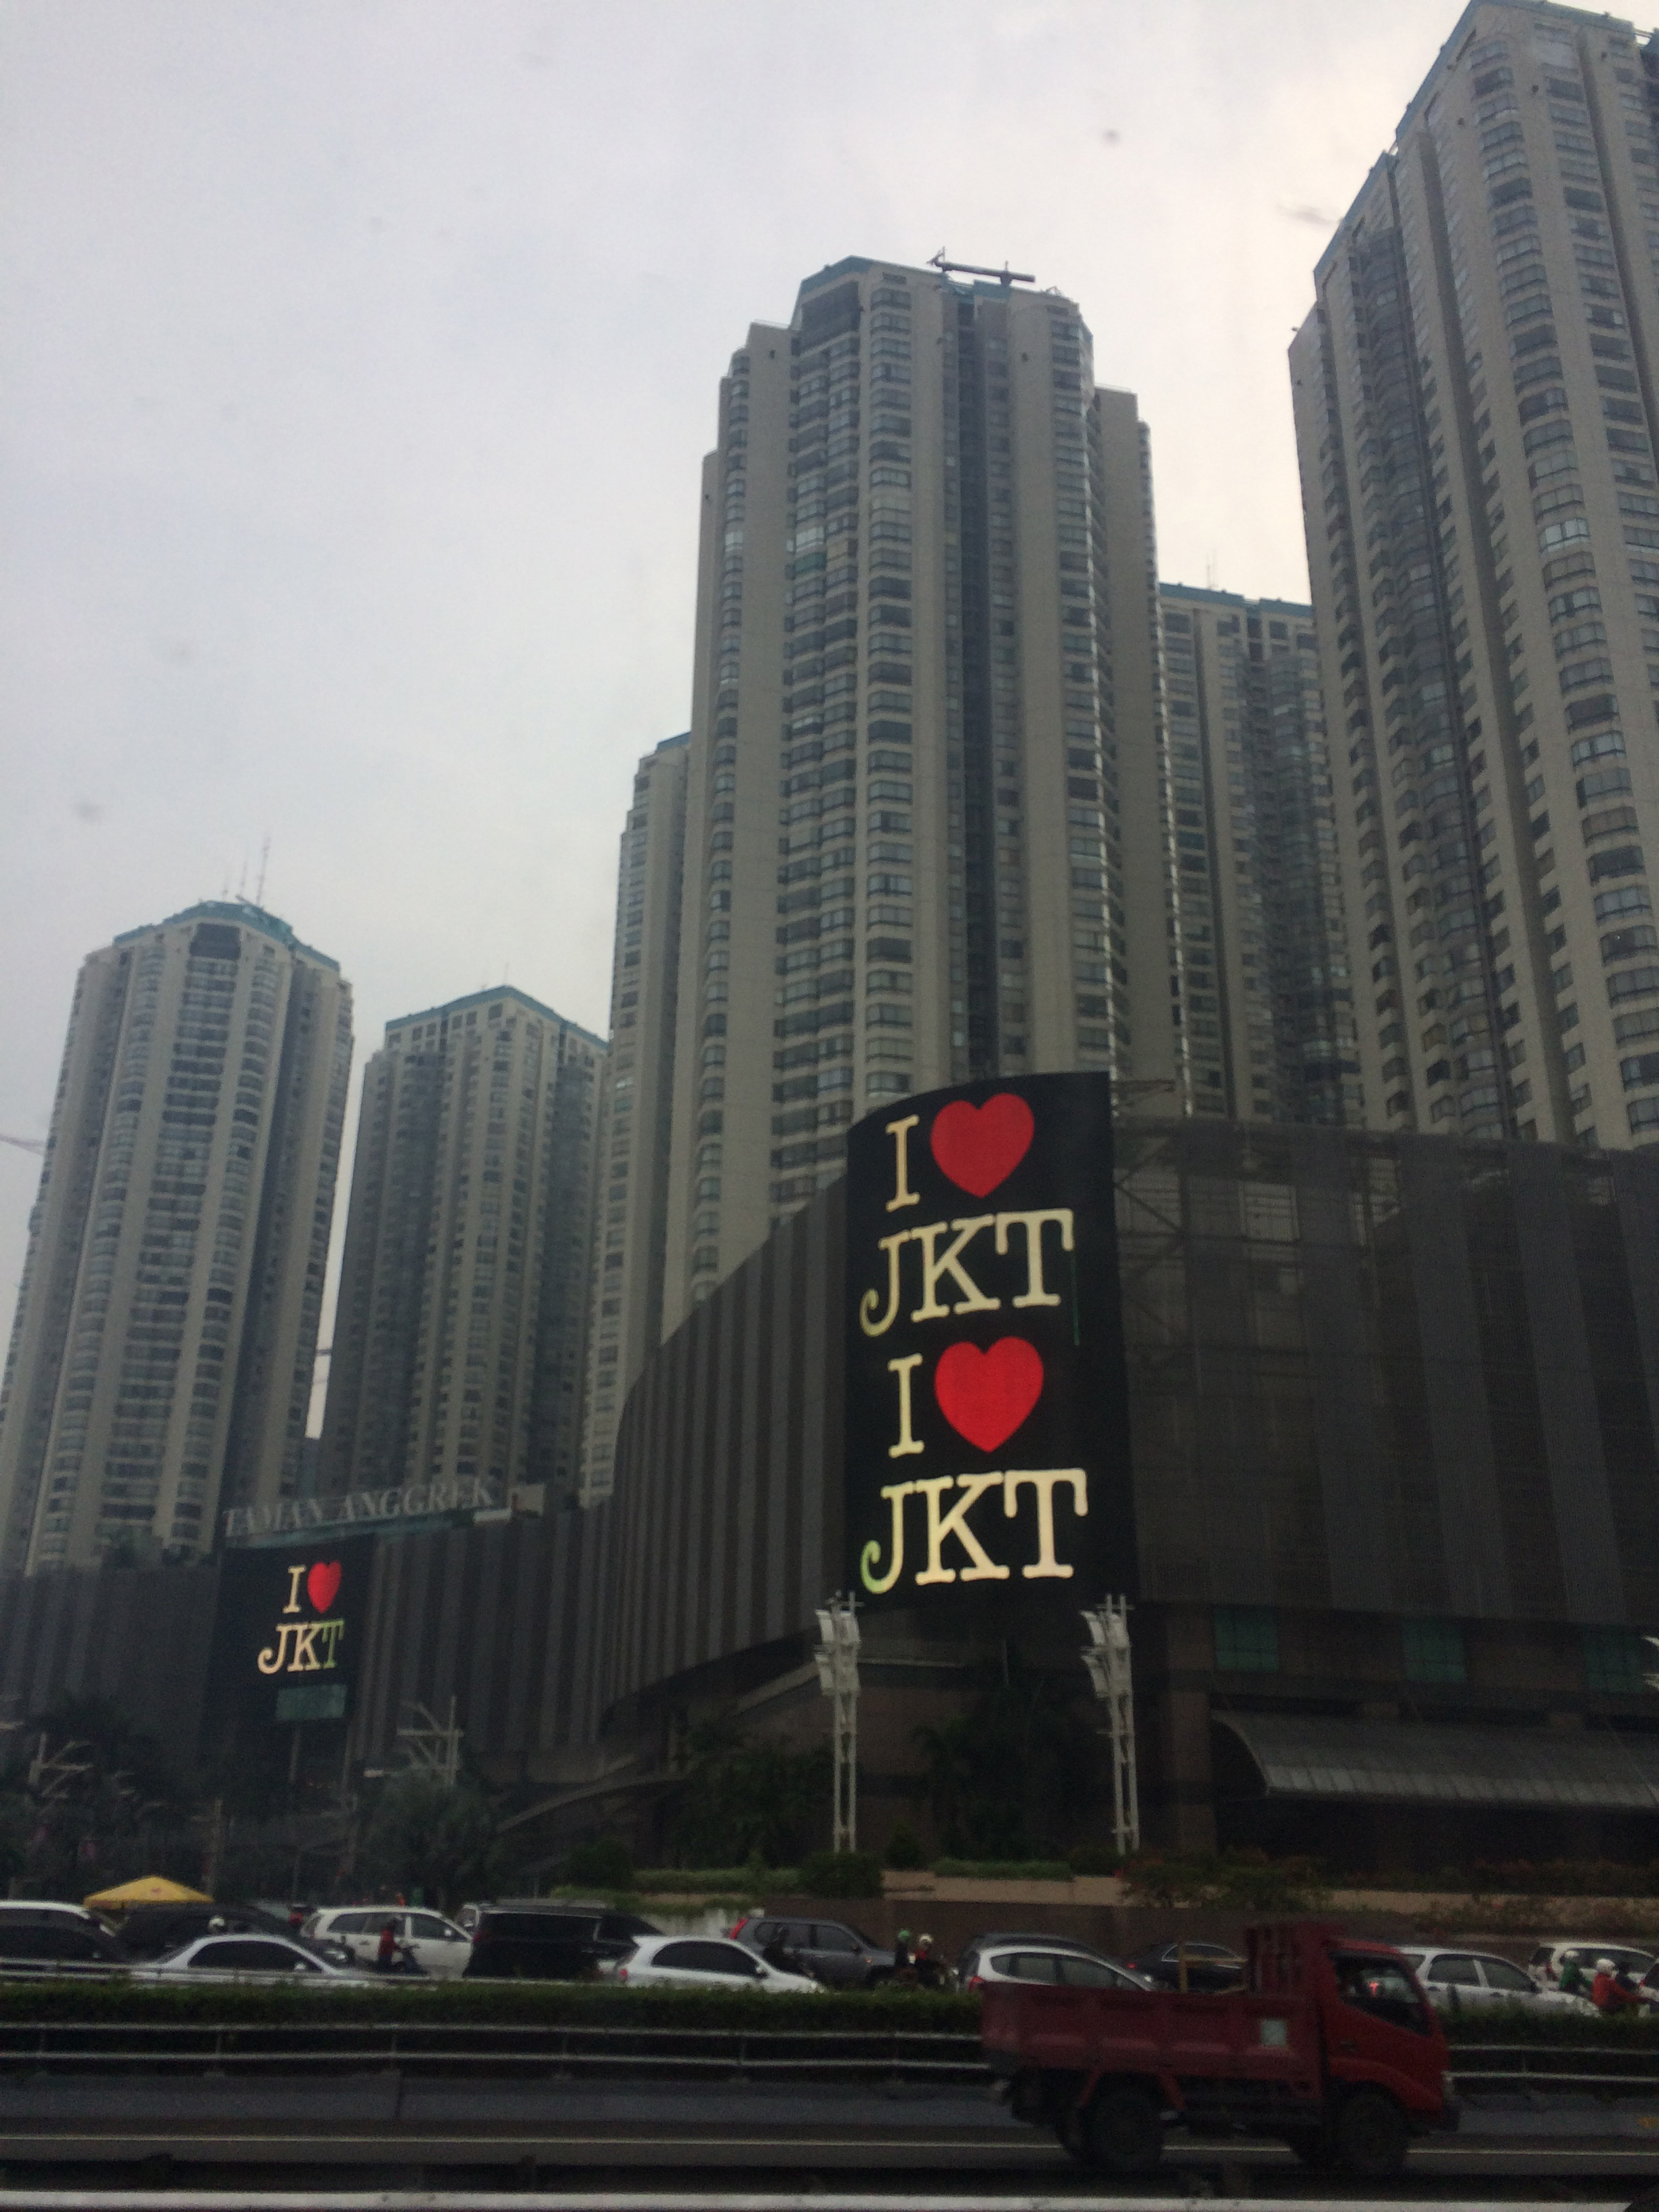 La capitale  Jakarta Jakarta Java  Indon sie Routard com